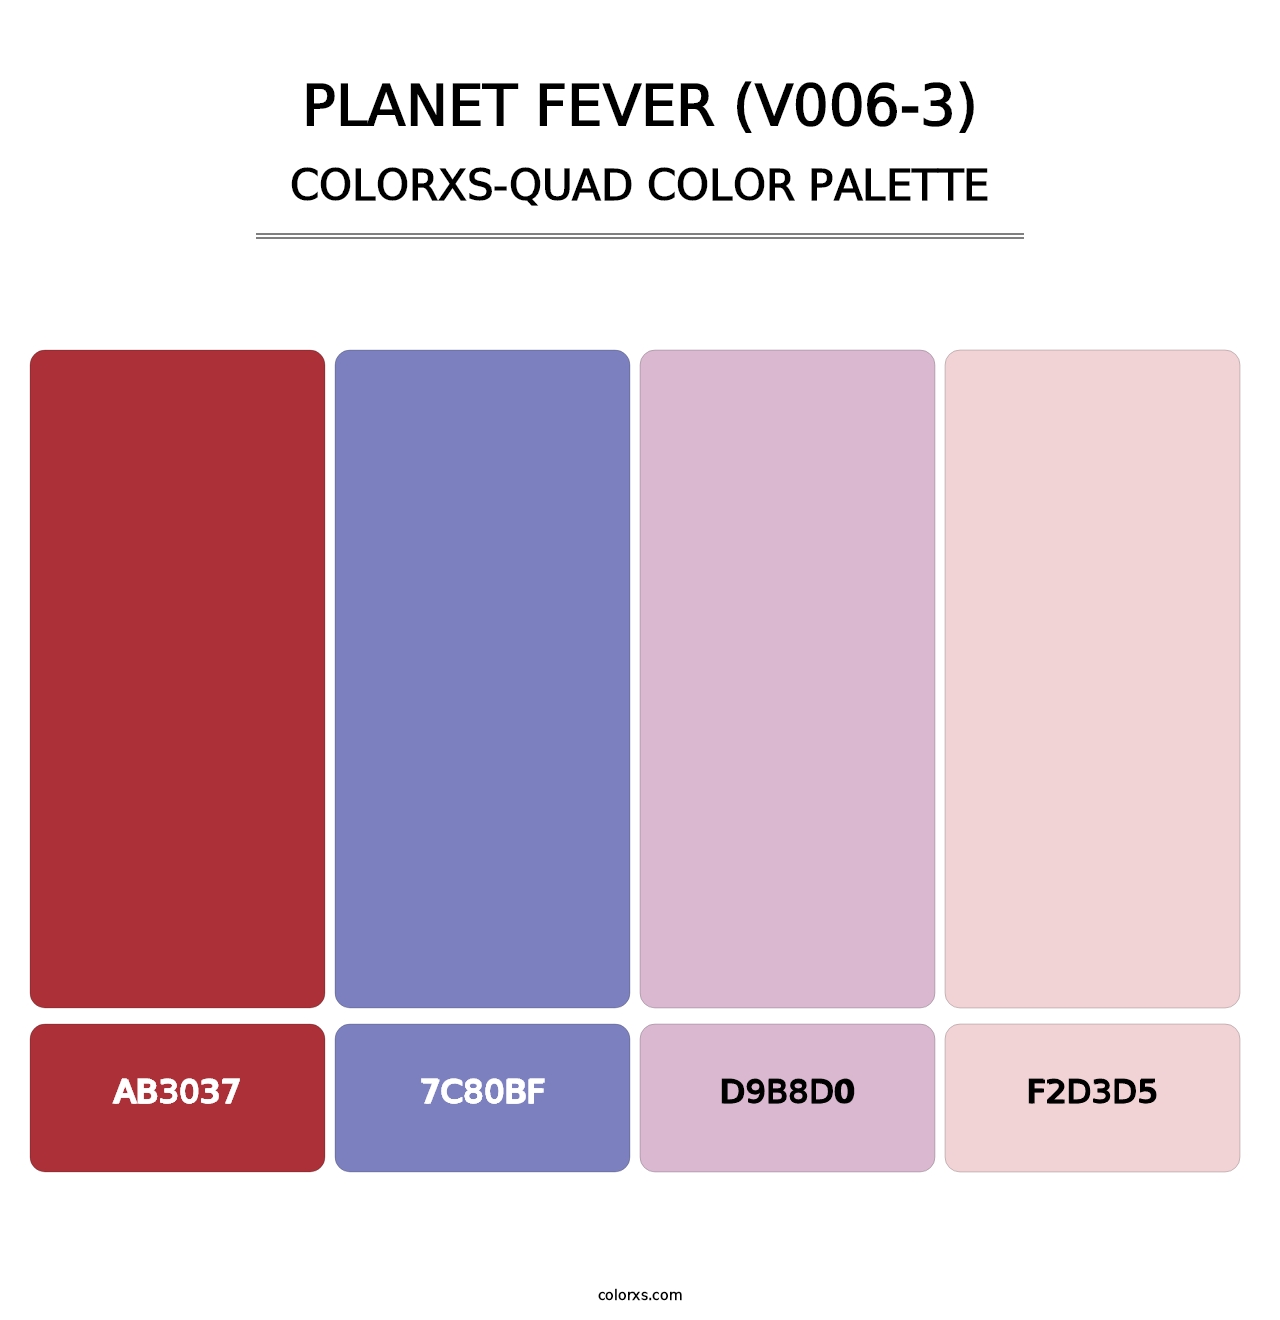 Planet Fever (V006-3) - Colorxs Quad Palette